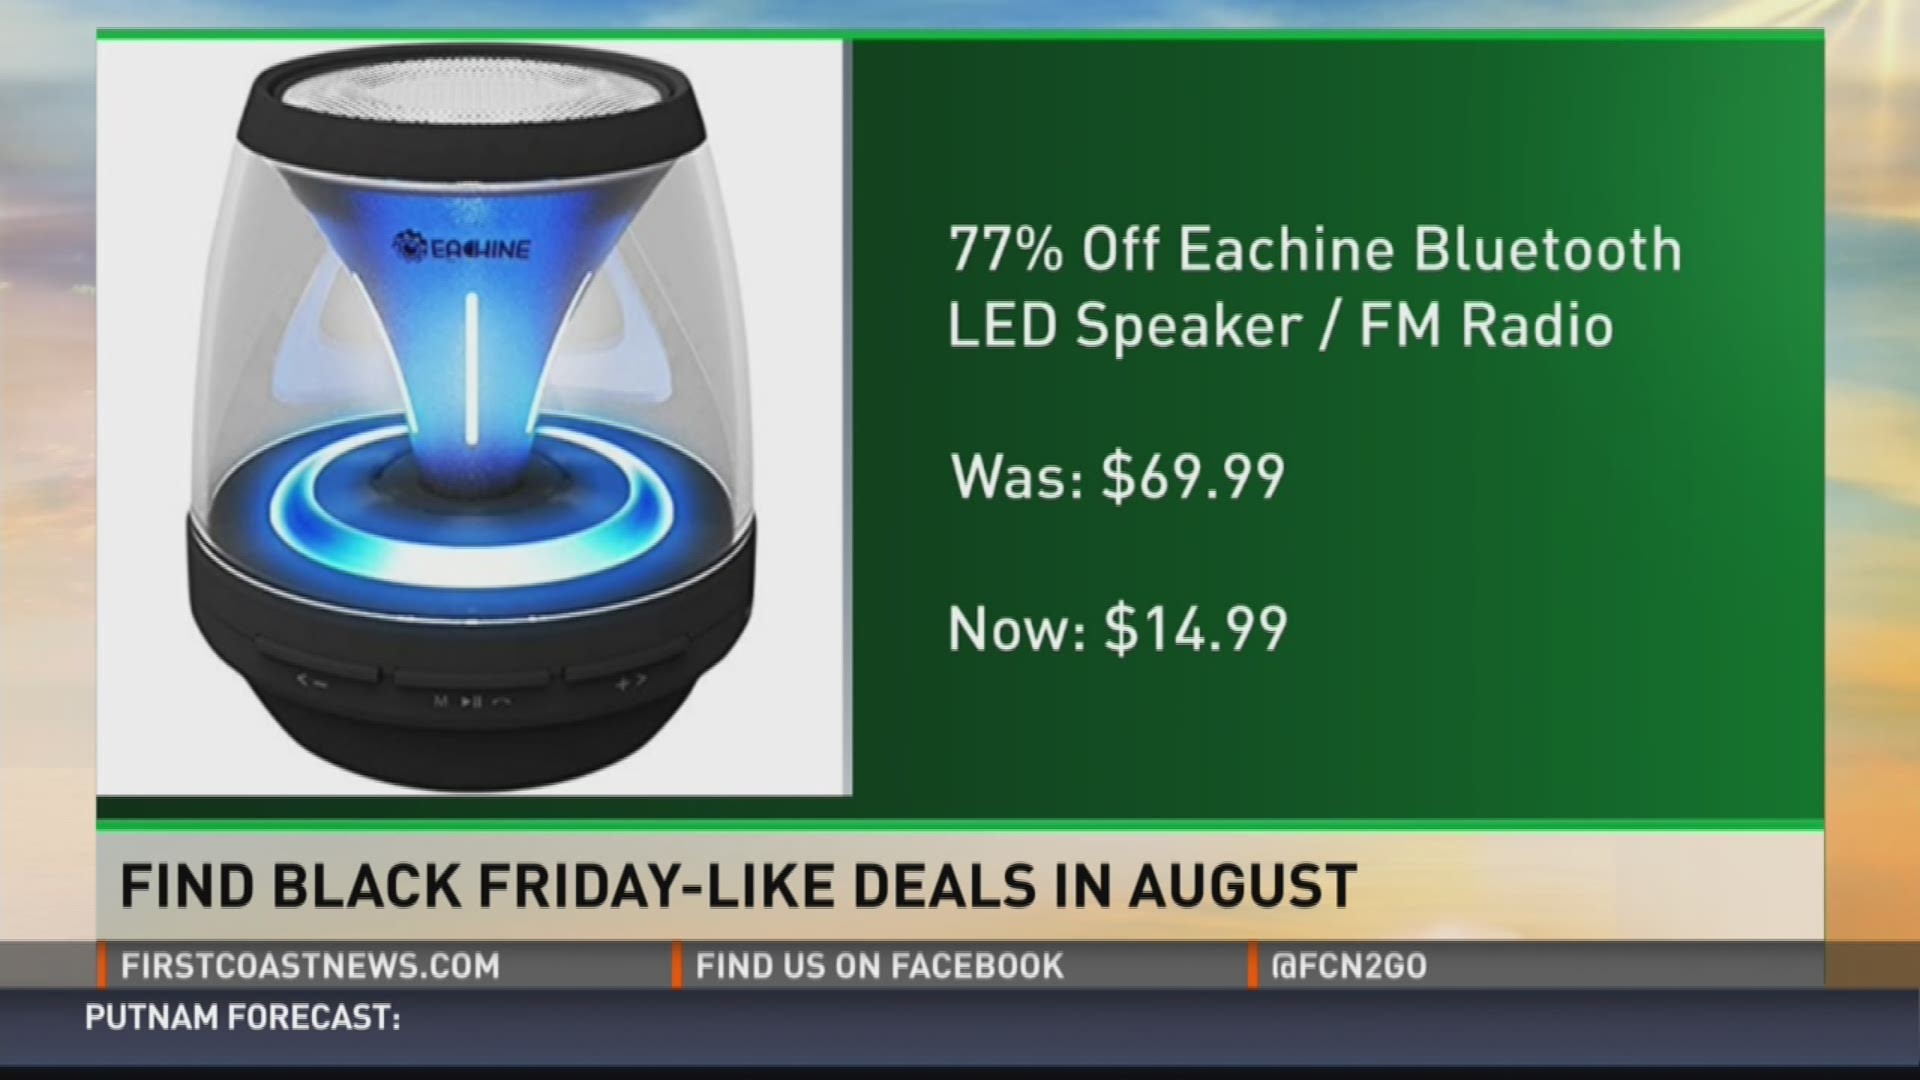 Bluetooth speaker for under $15?